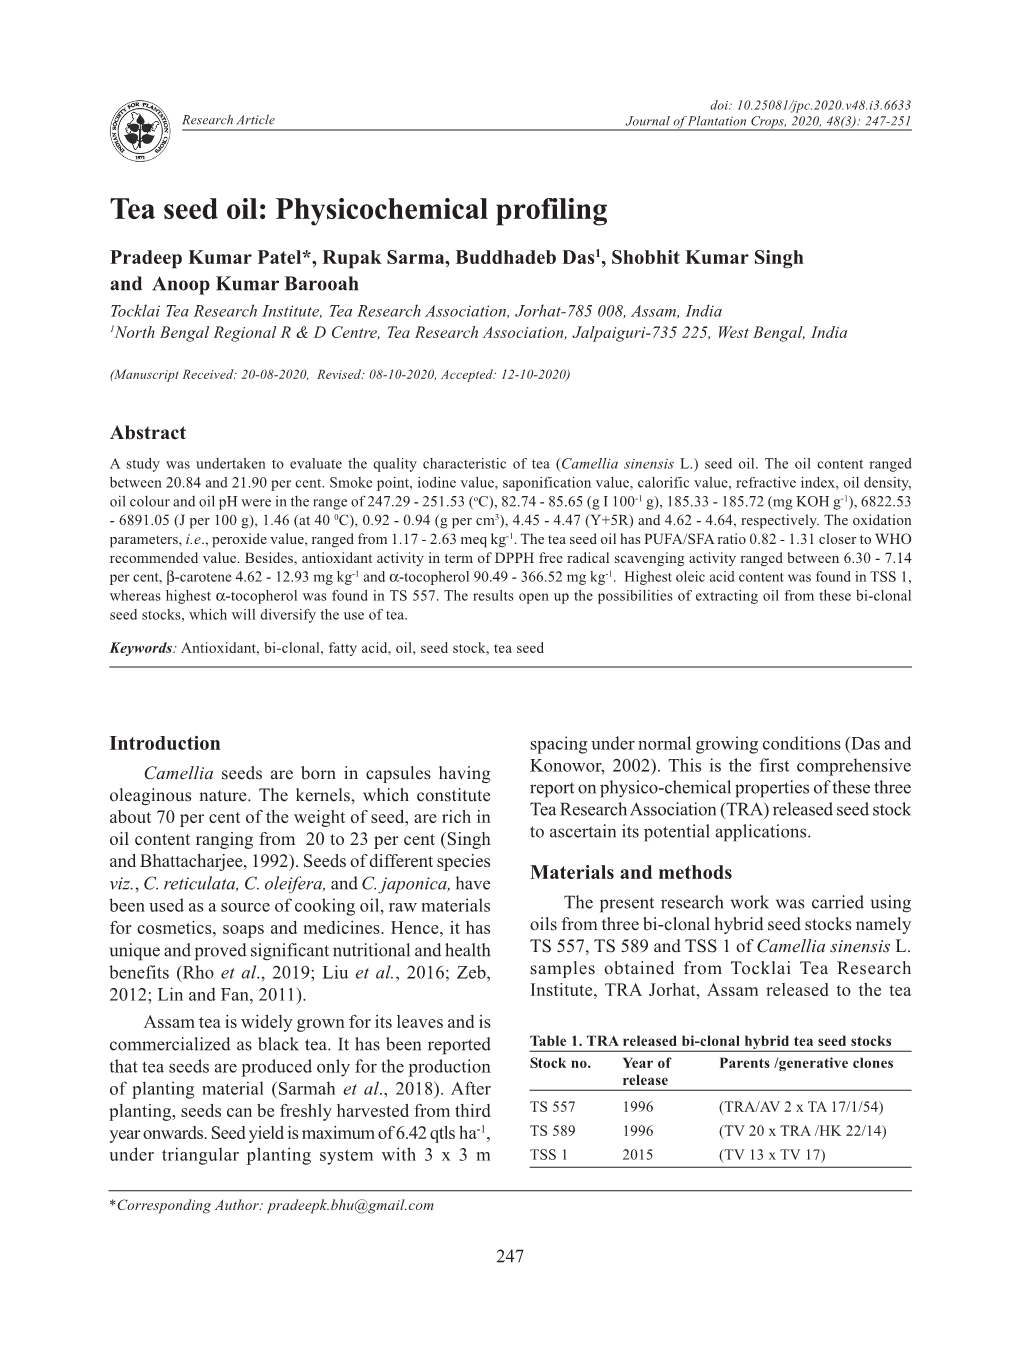 Tea Seed Oil: Physicochemical Profiling